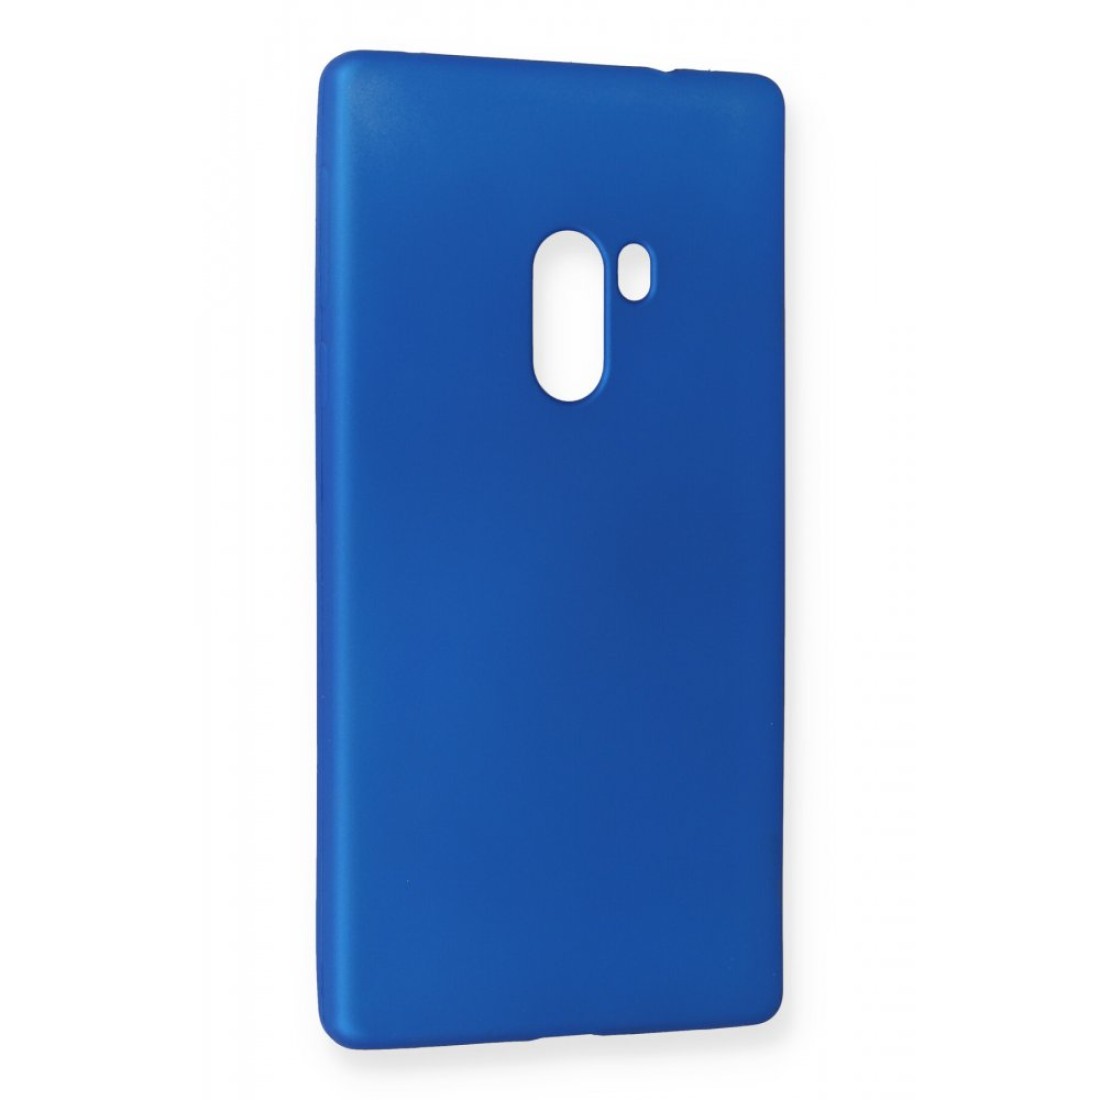 Xiaomi Mi Mix Kılıf Premium Rubber Silikon - Mavi